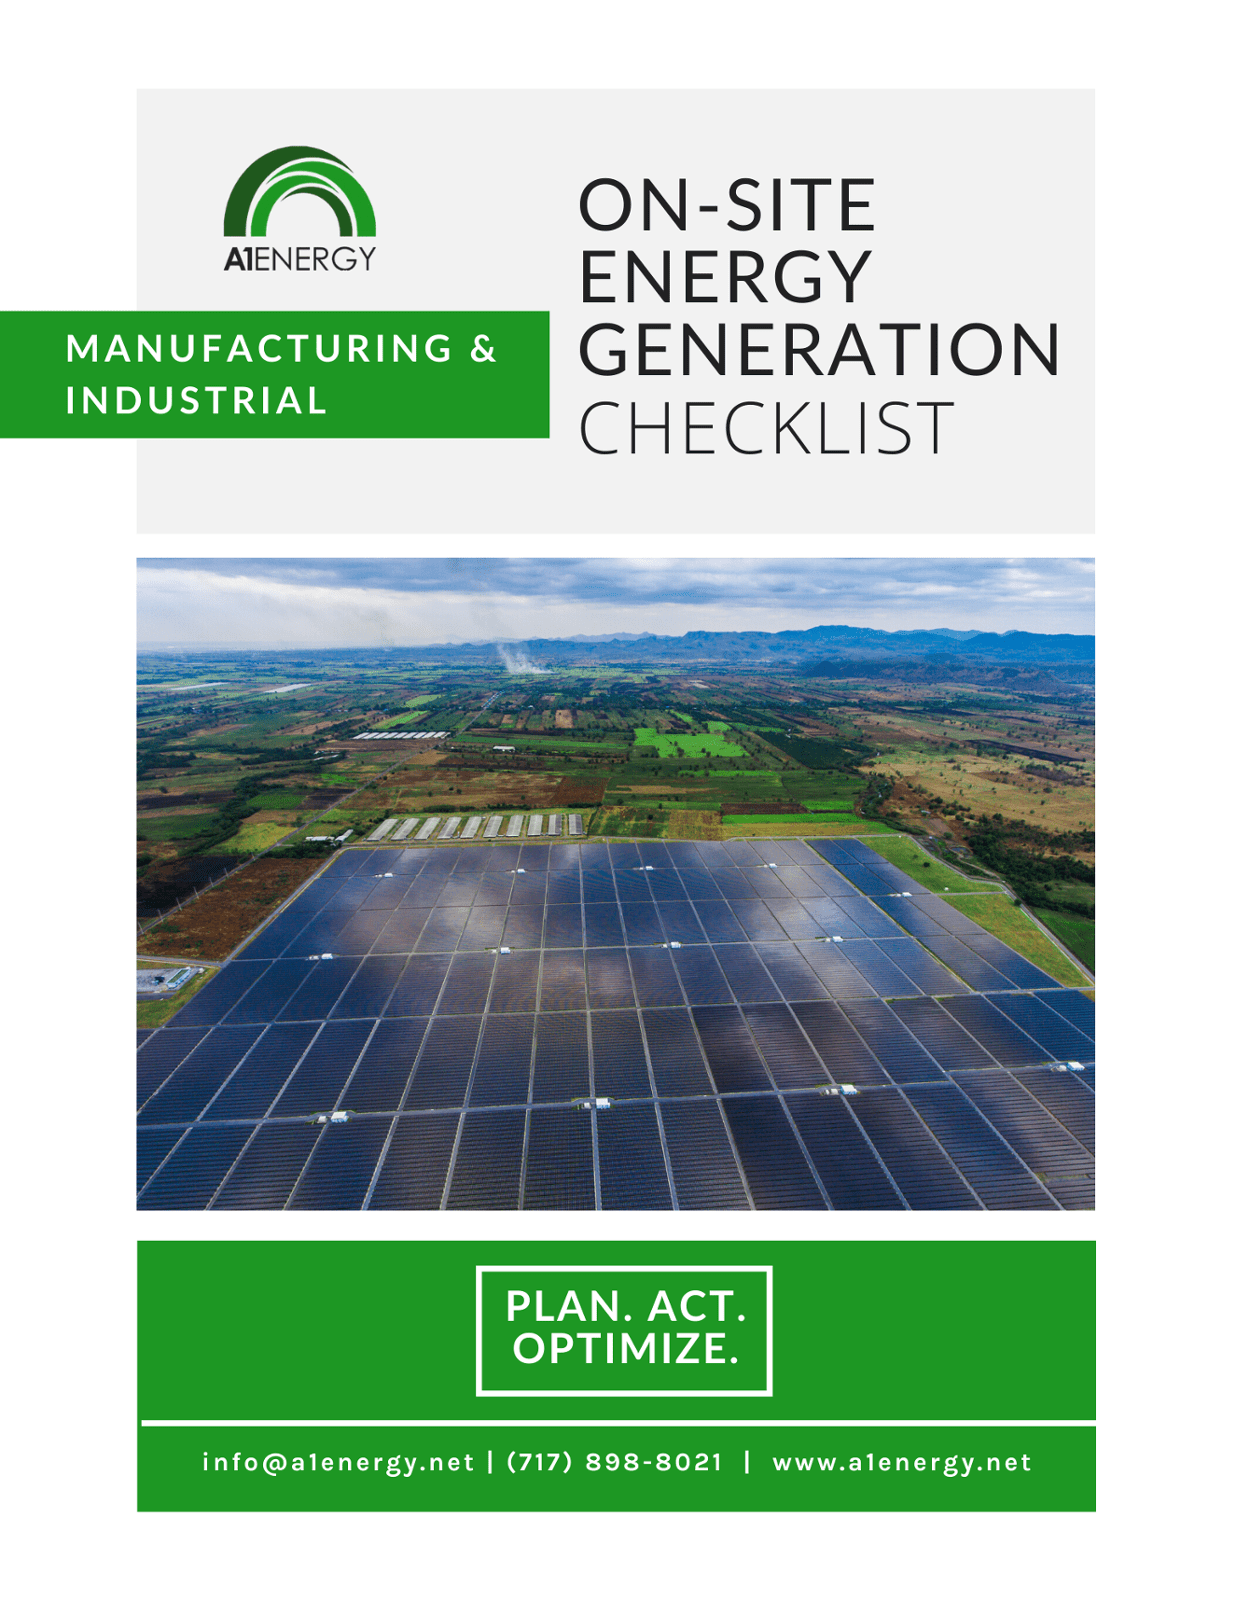 Energy generation checklist